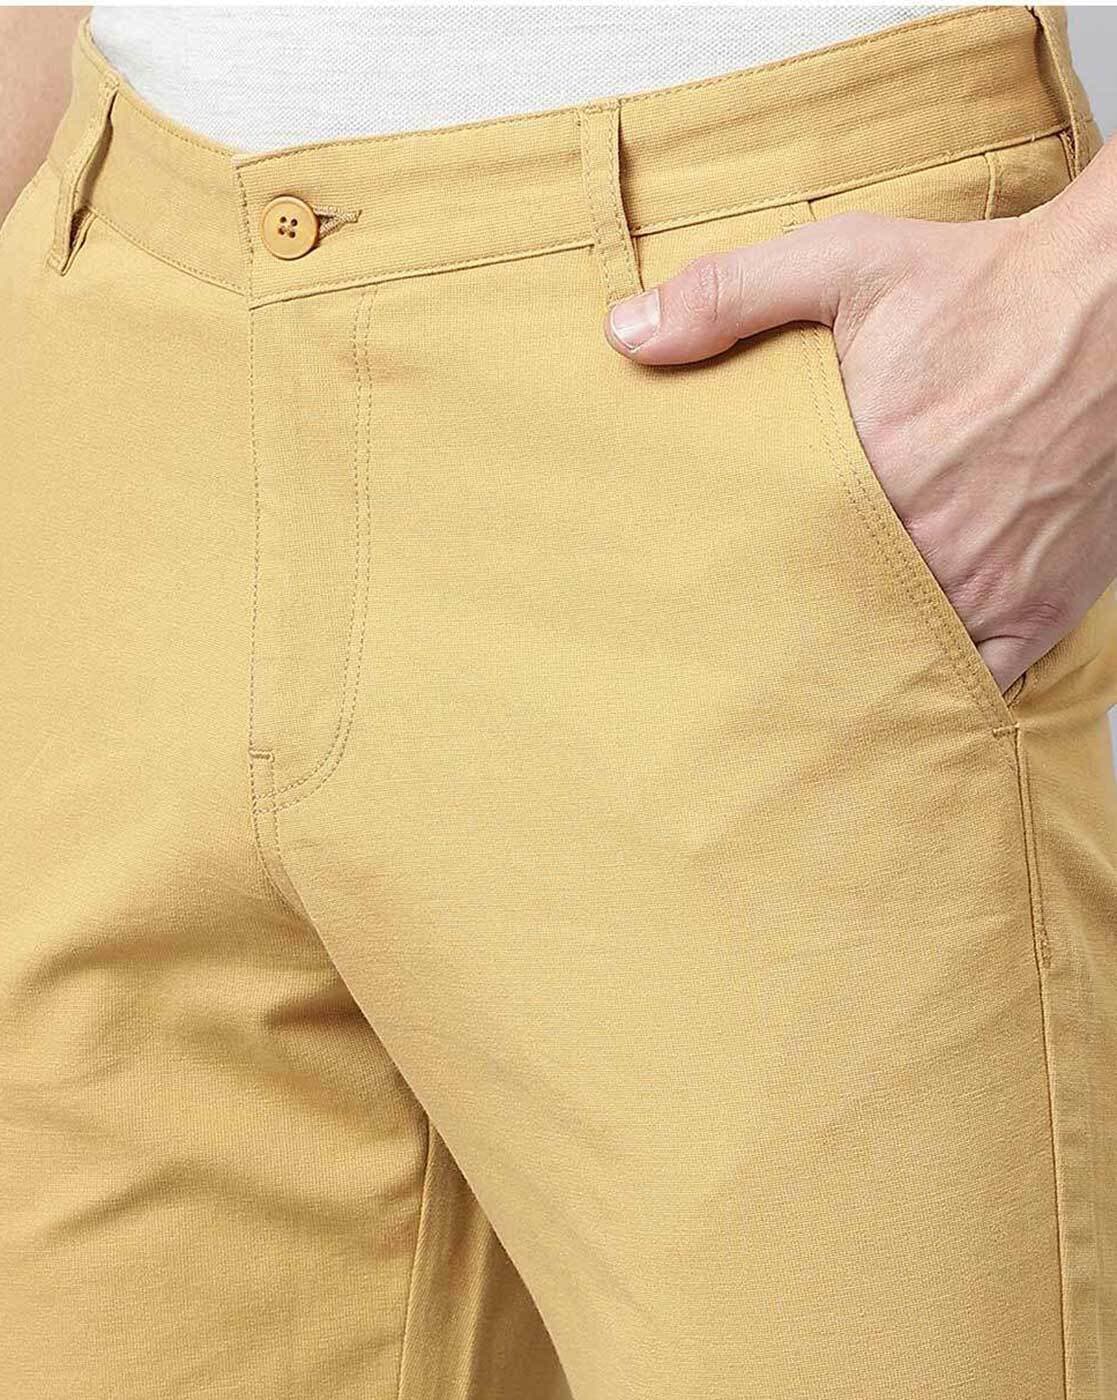 RAFFON Slim Fit Men Yellow Trousers  Buy RAFFON Slim Fit Men Yellow  Trousers Online at Best Prices in India  Flipkartcom